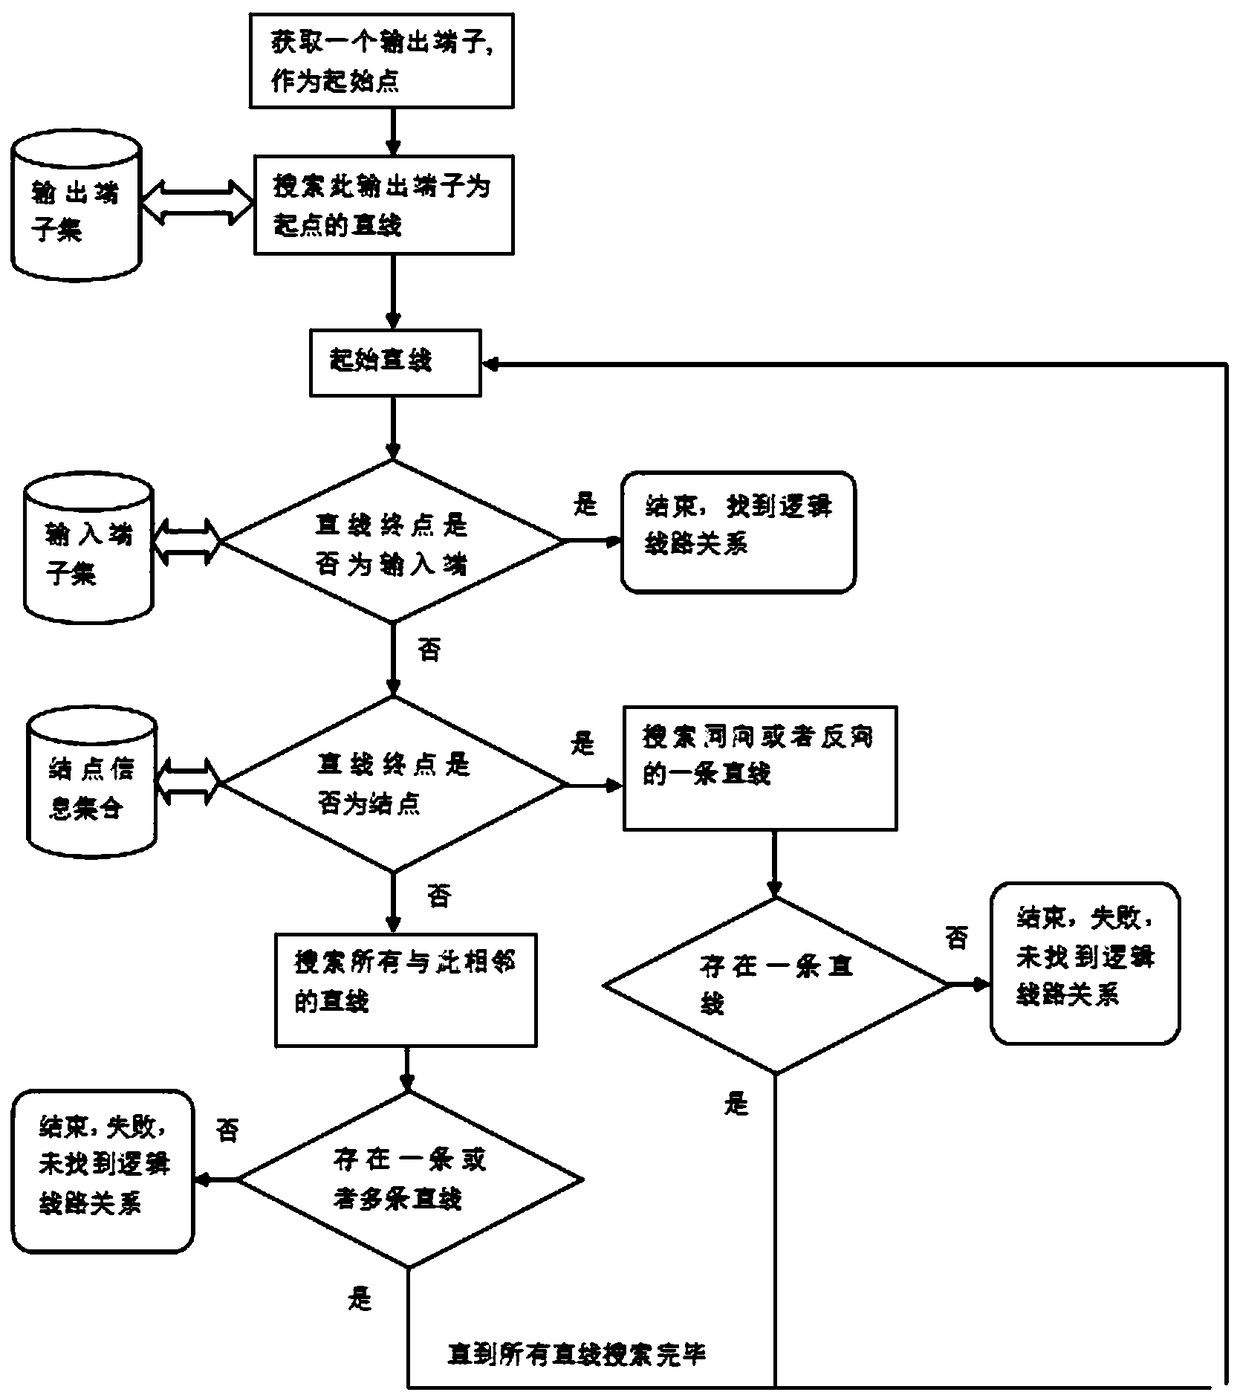 A machine vision detection algorithm for logic circuit diagram information extraction